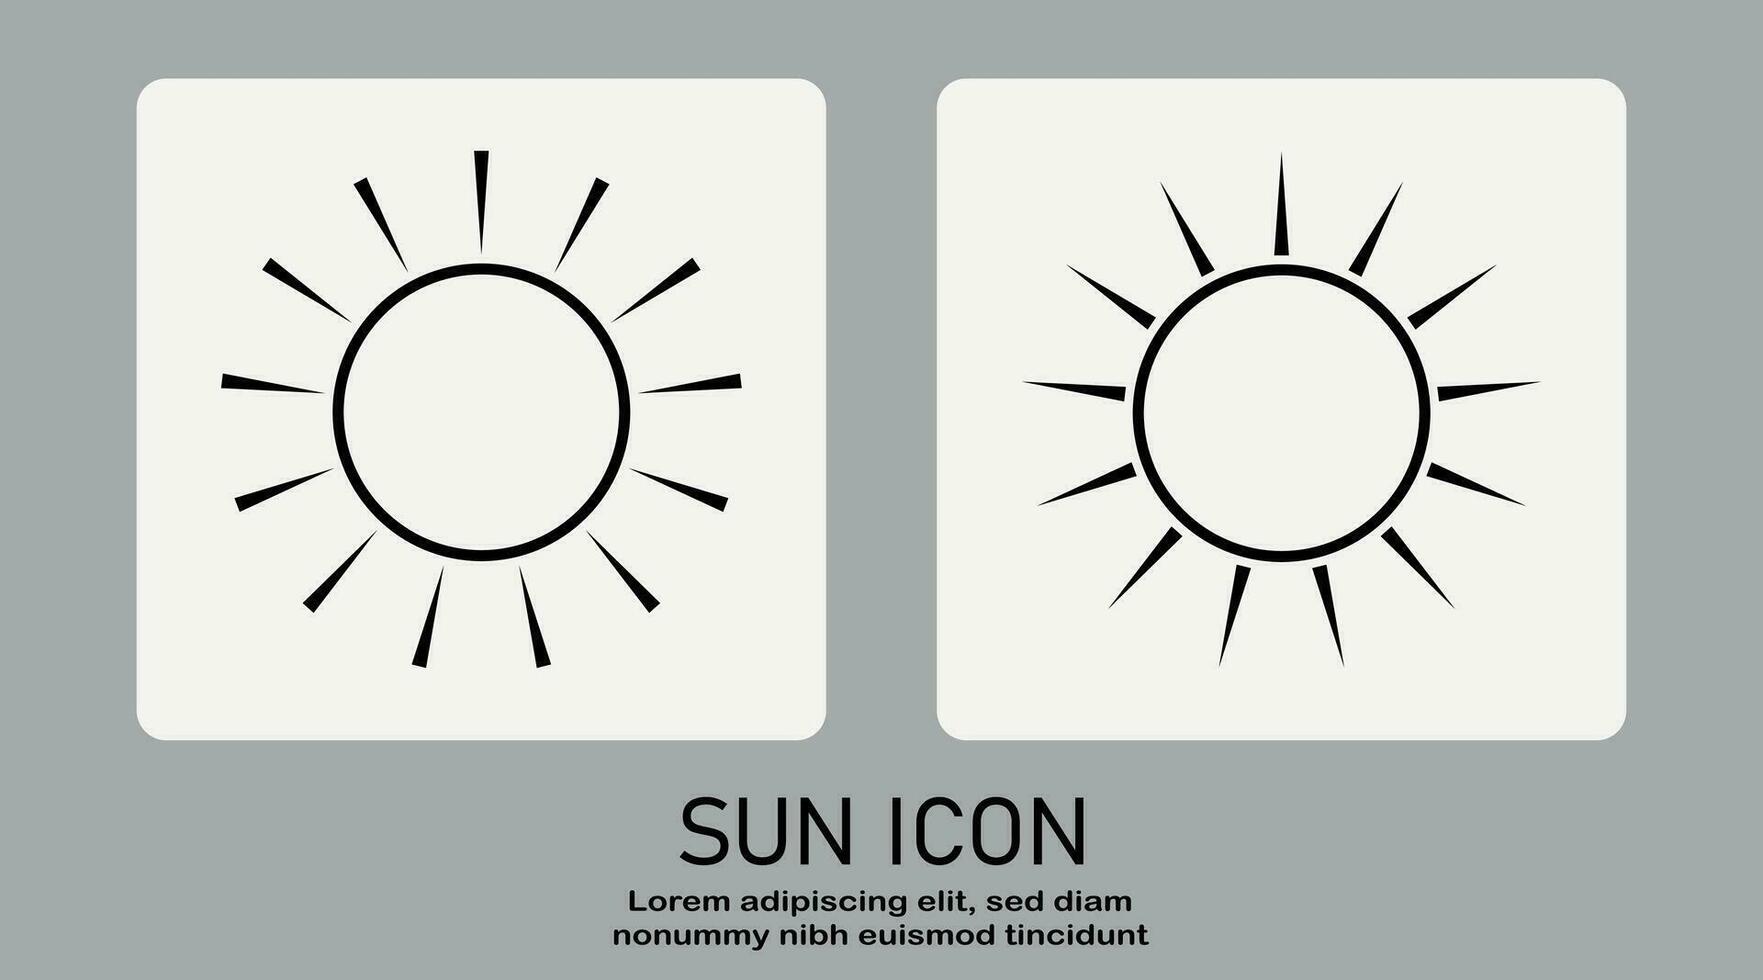 Sunrise or sunset icon, sun icon vector isolated on white background.